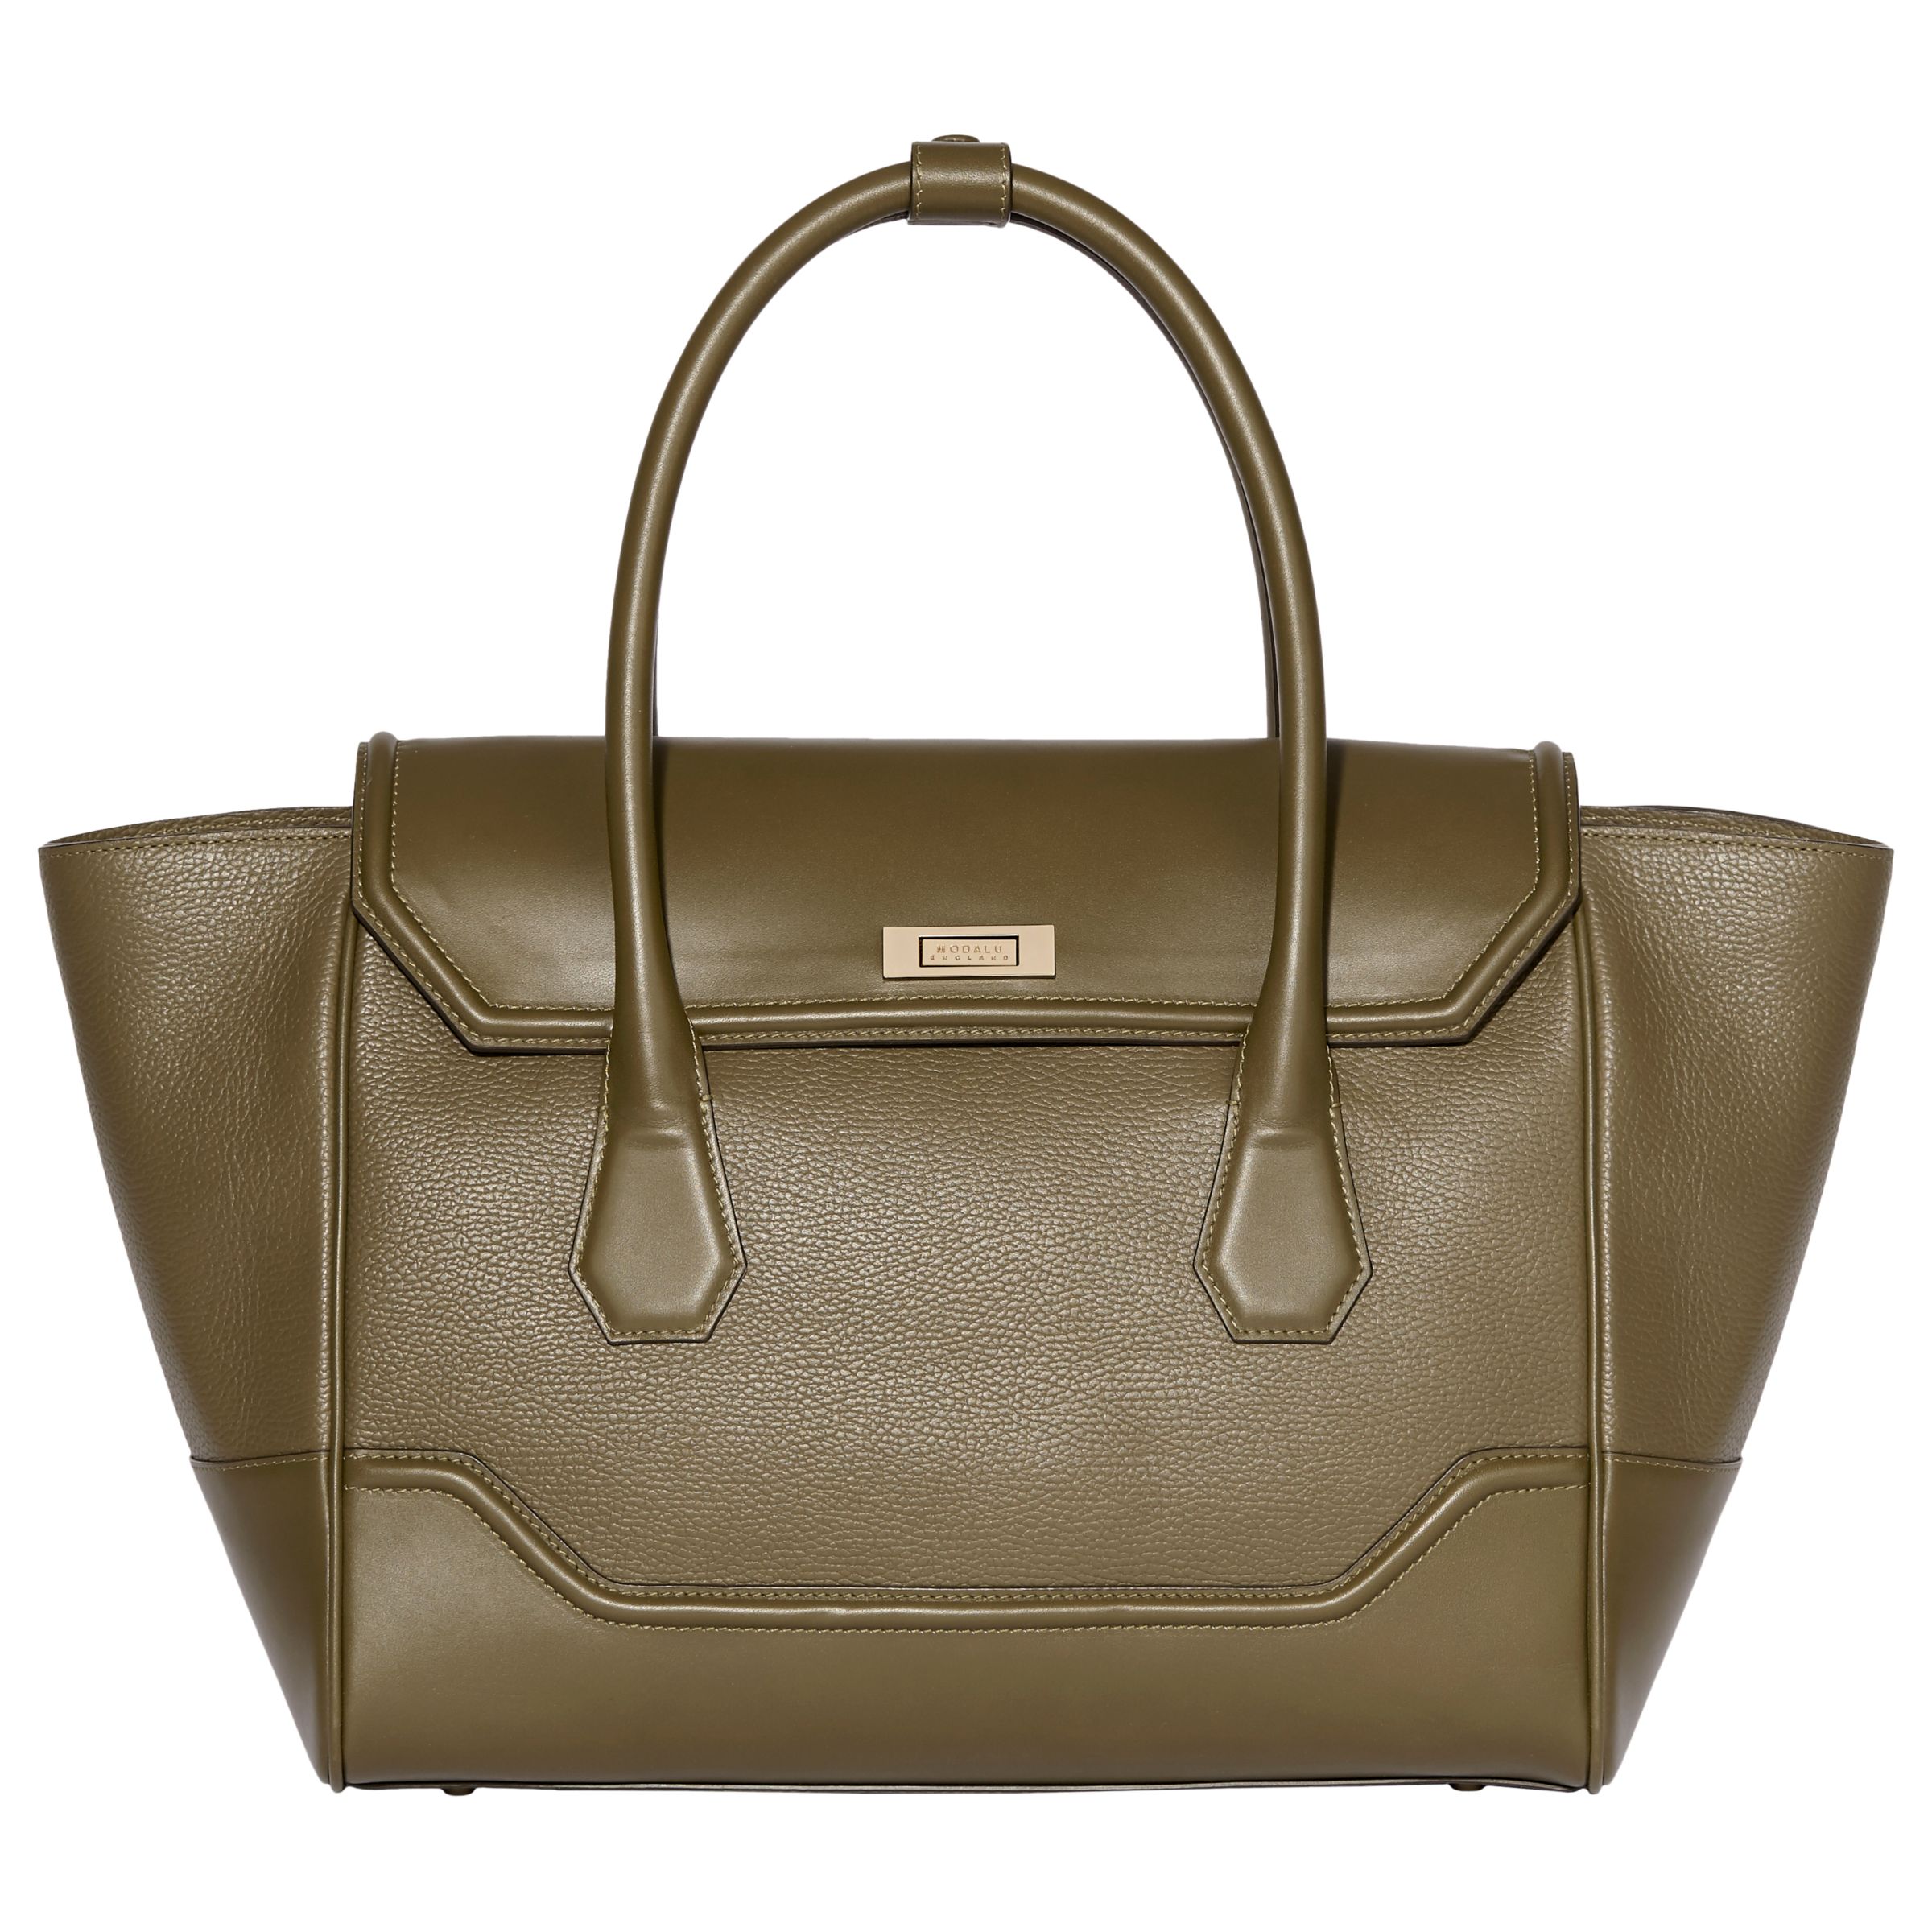 Modalu Hemingway Leather Large Grab Bag